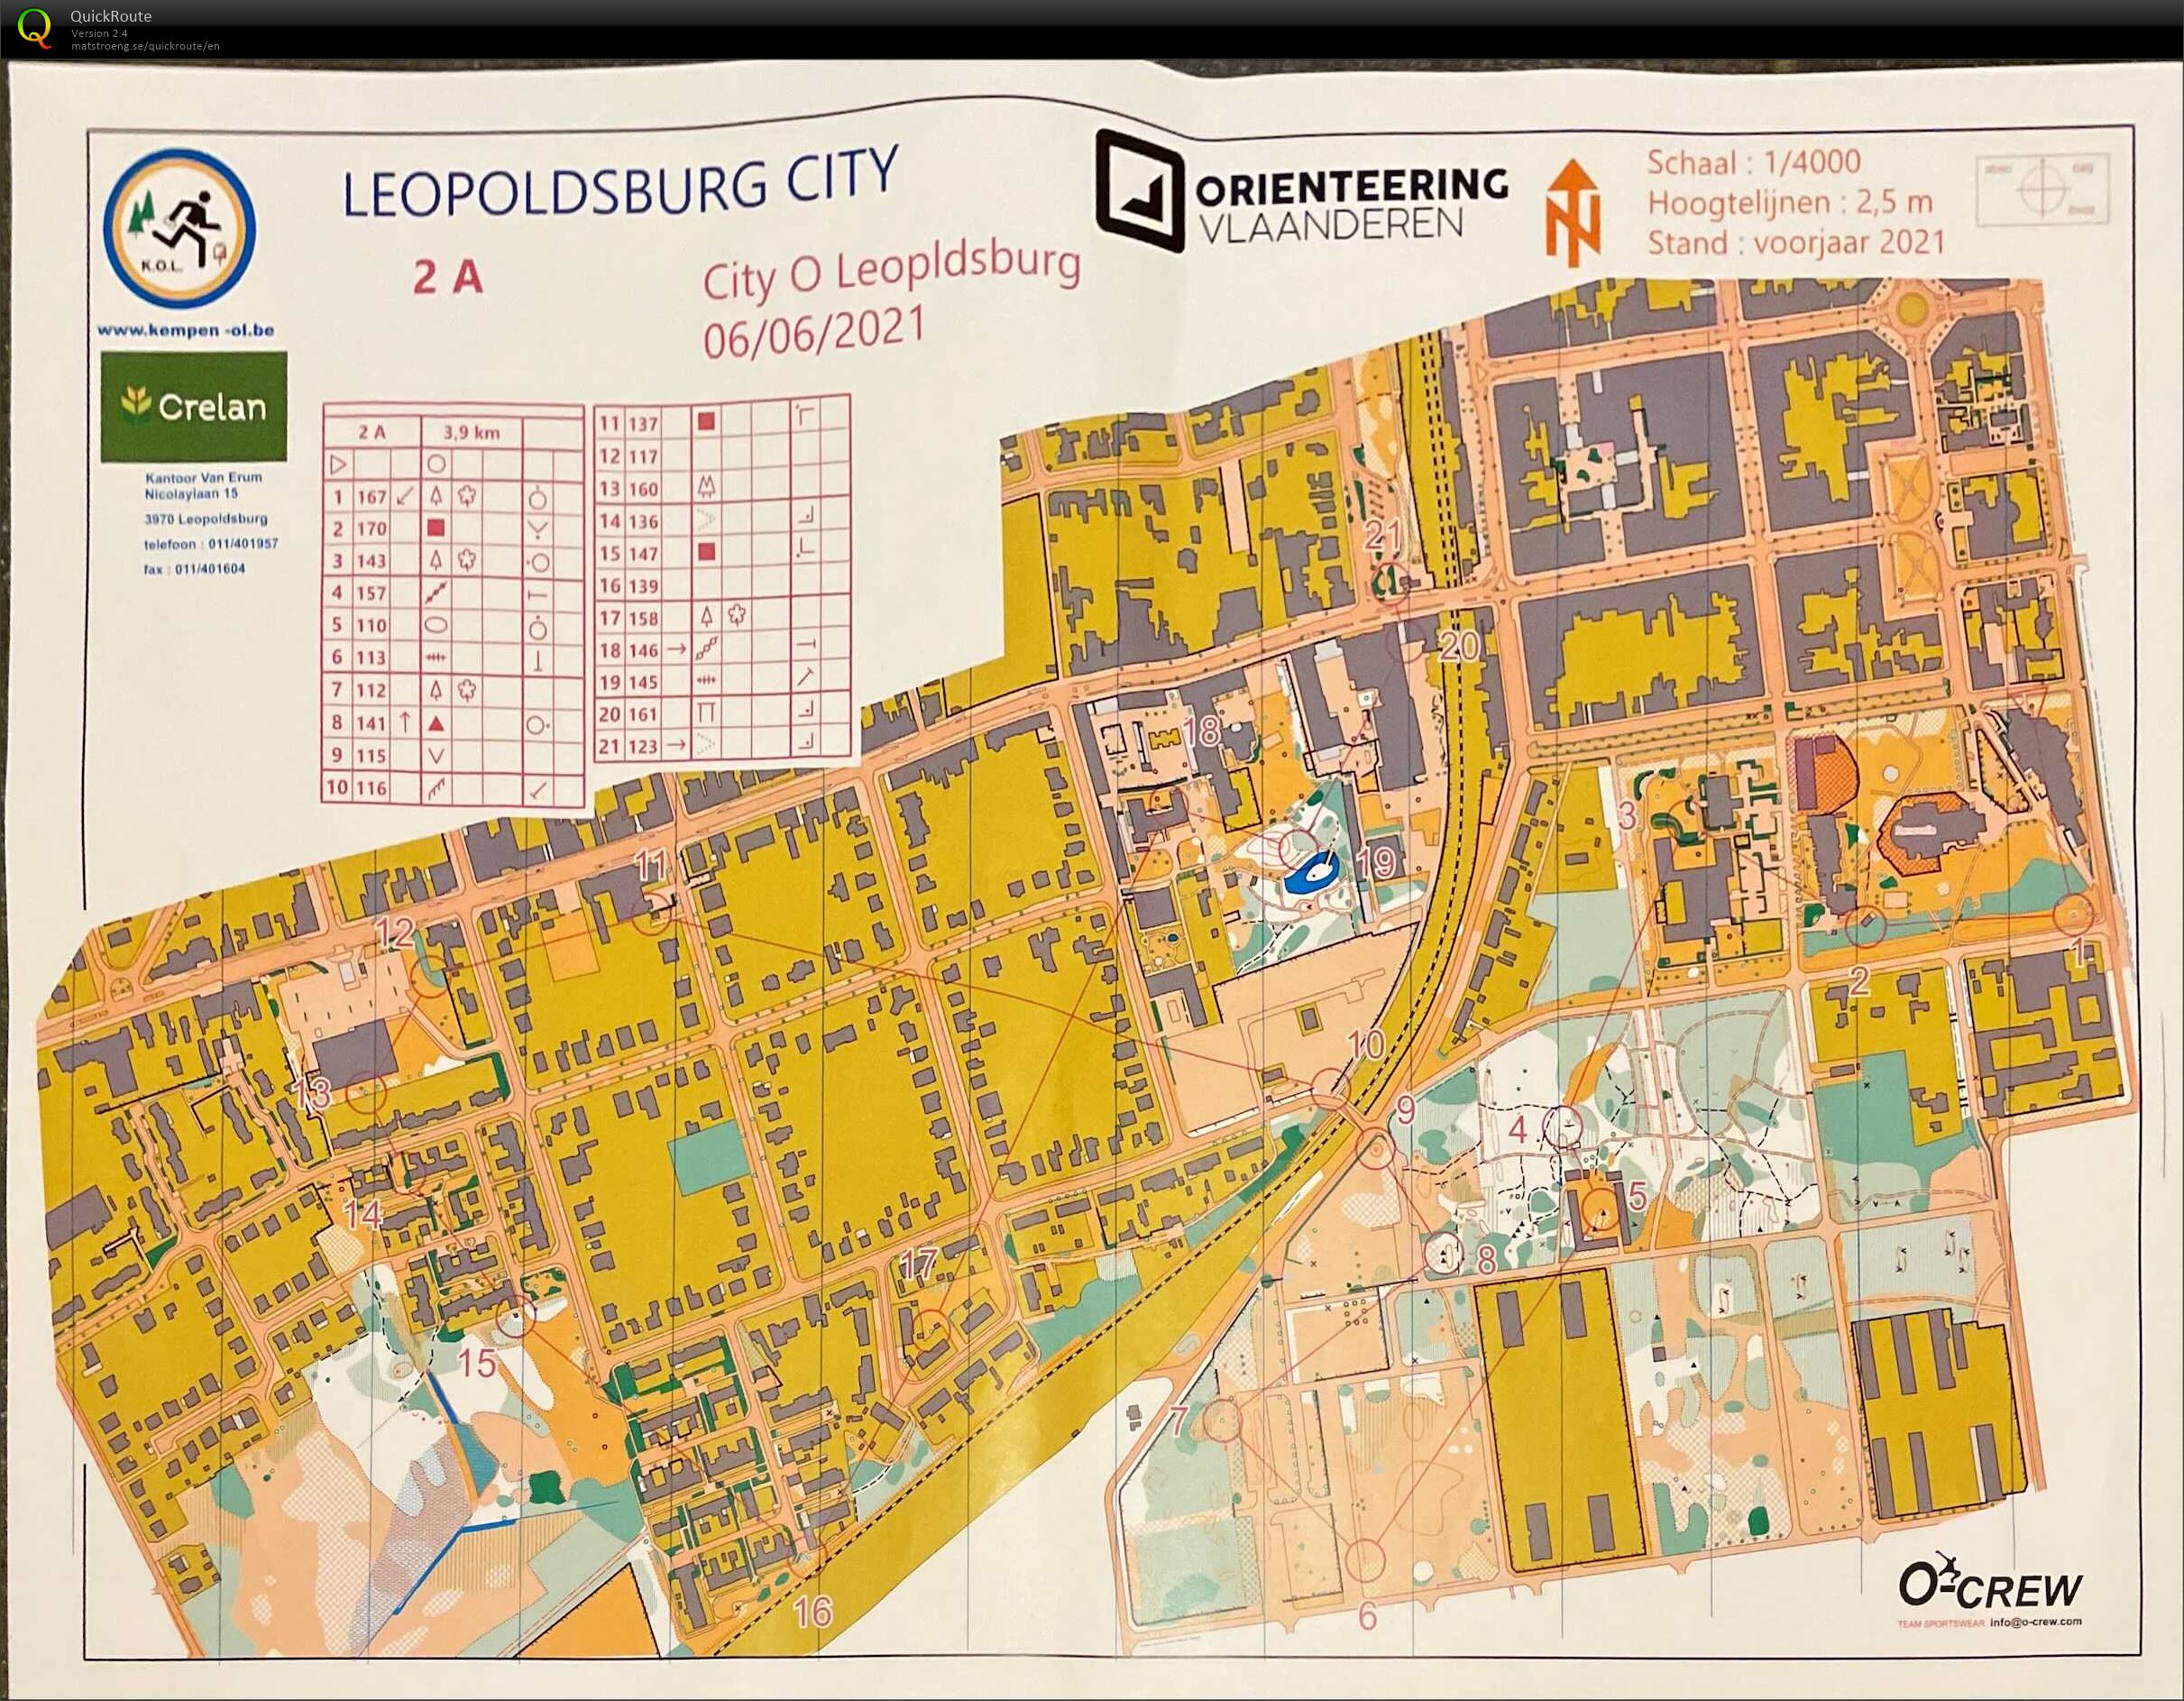 Leopoldsburg City - A (2021-06-06)